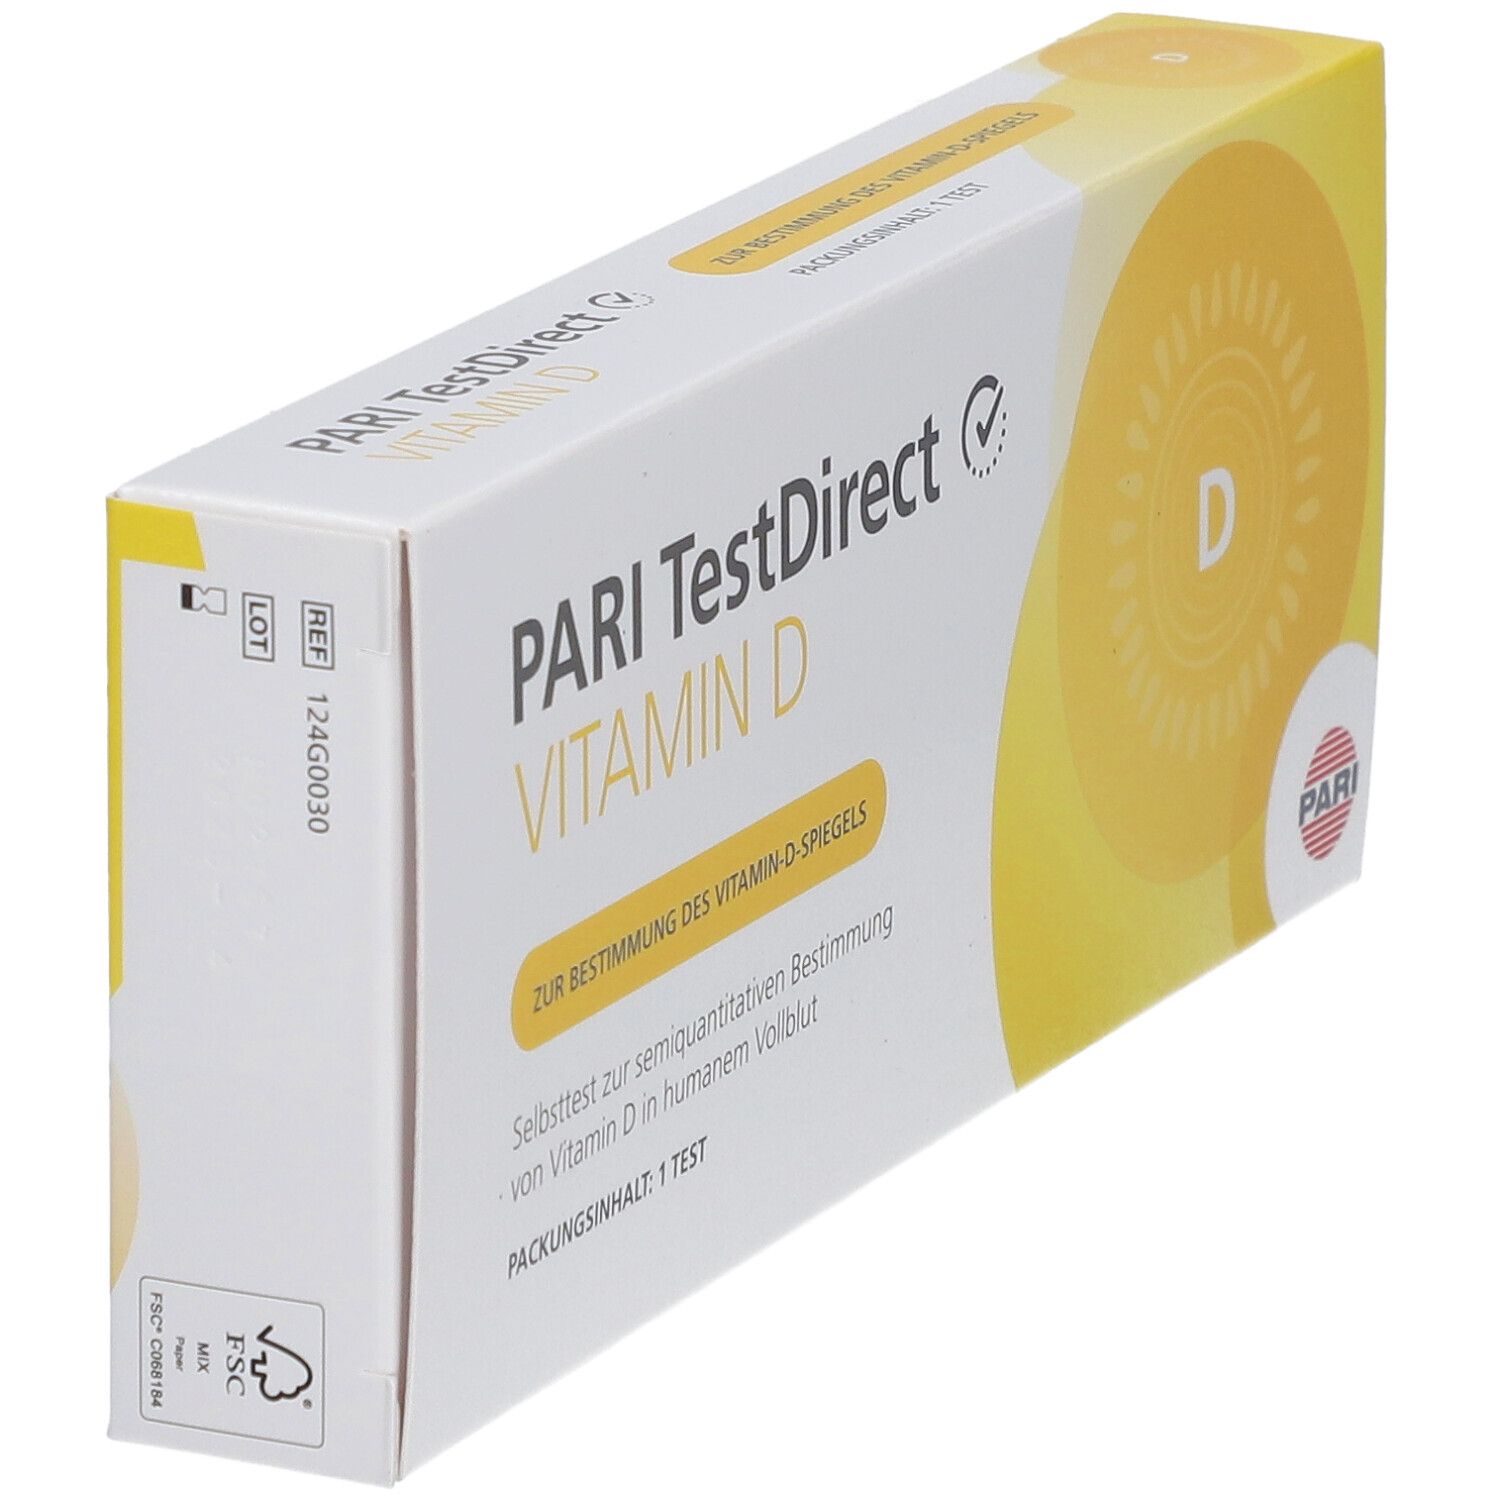 PARI TestDirect Vitamin D